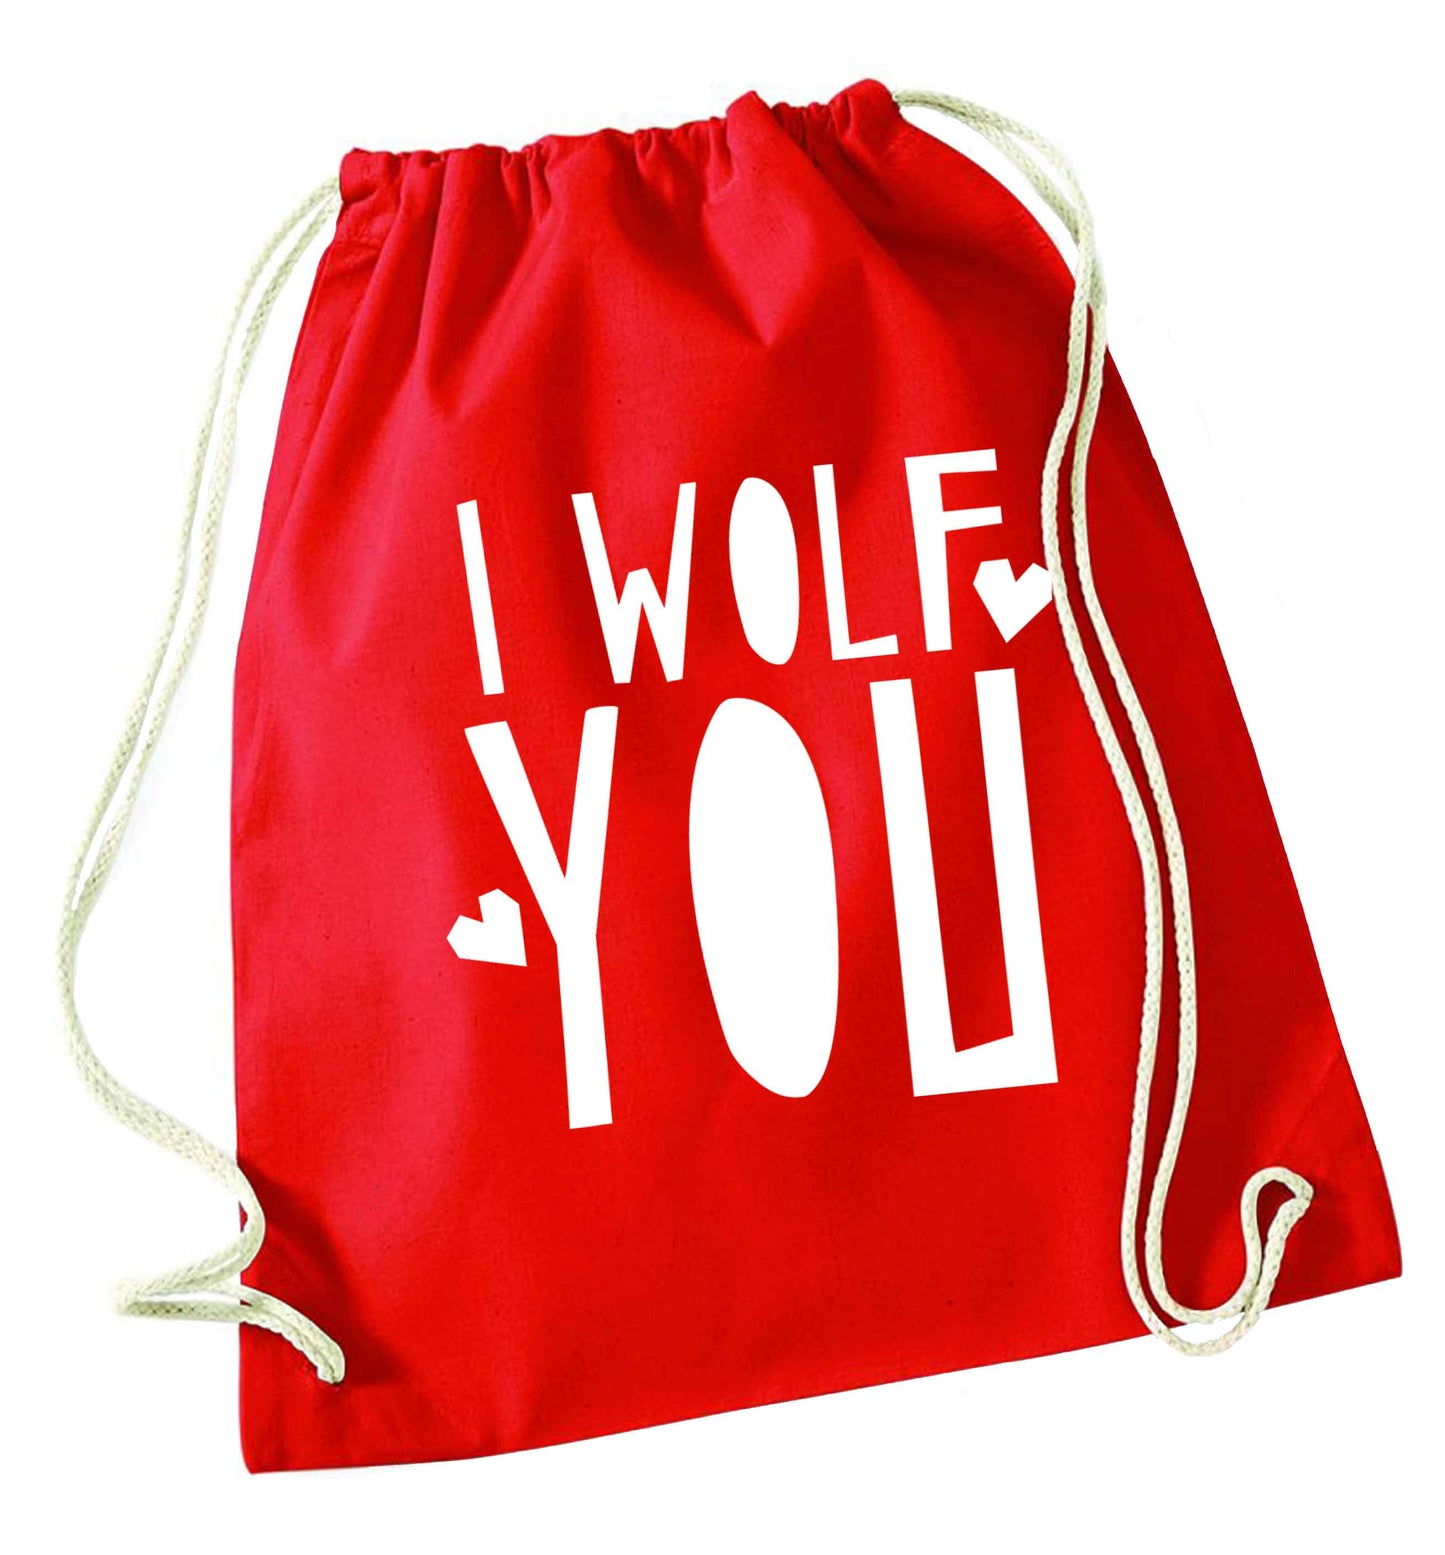 I wolf you red drawstring bag 